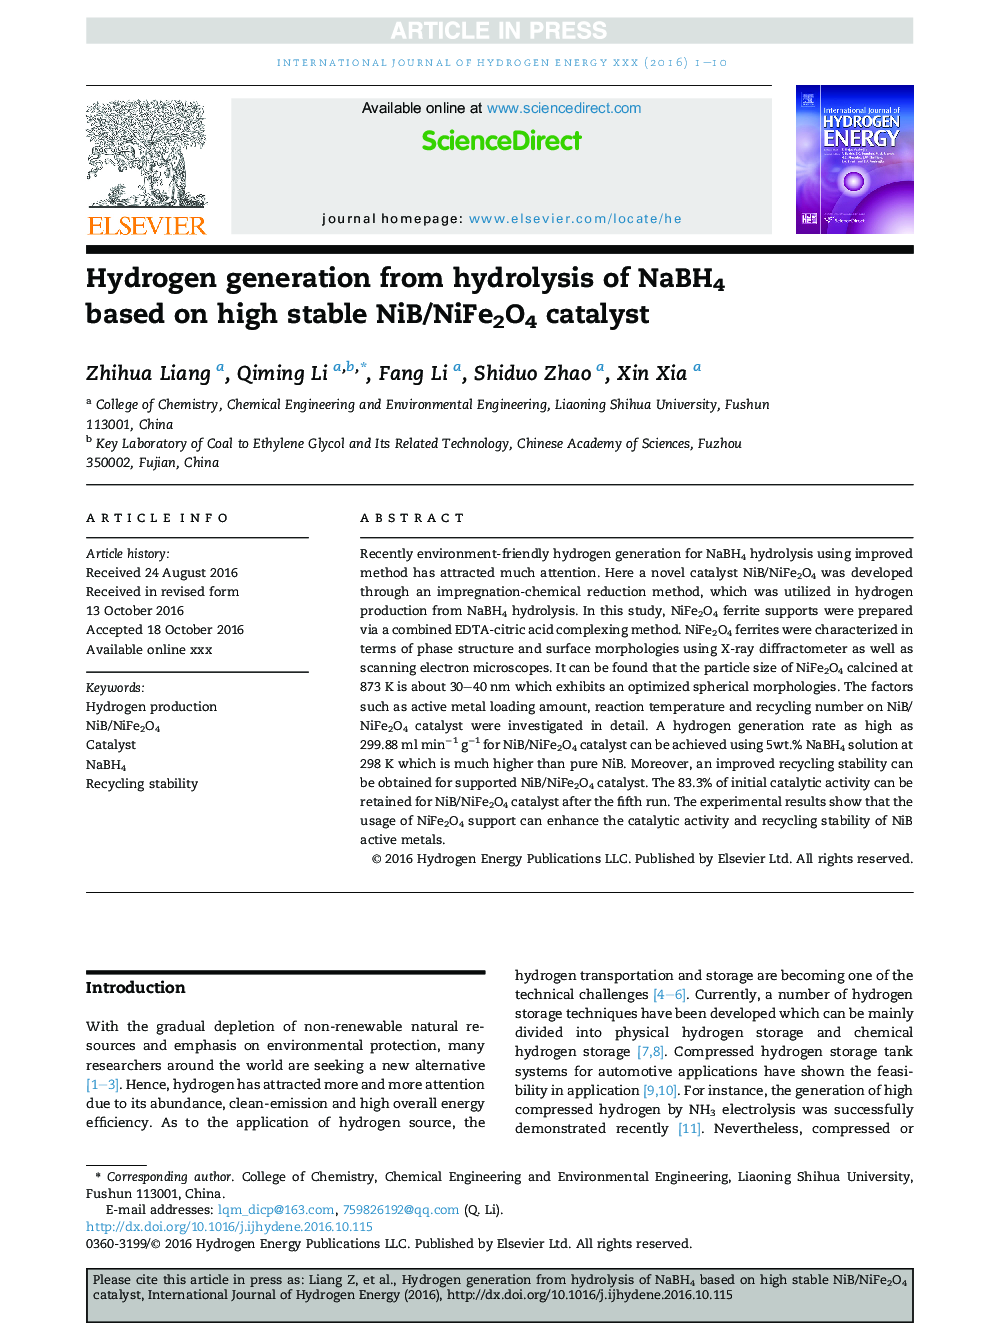 Hydrogen generation from hydrolysis of NaBH4 based on high stable NiB/NiFe2O4 catalyst